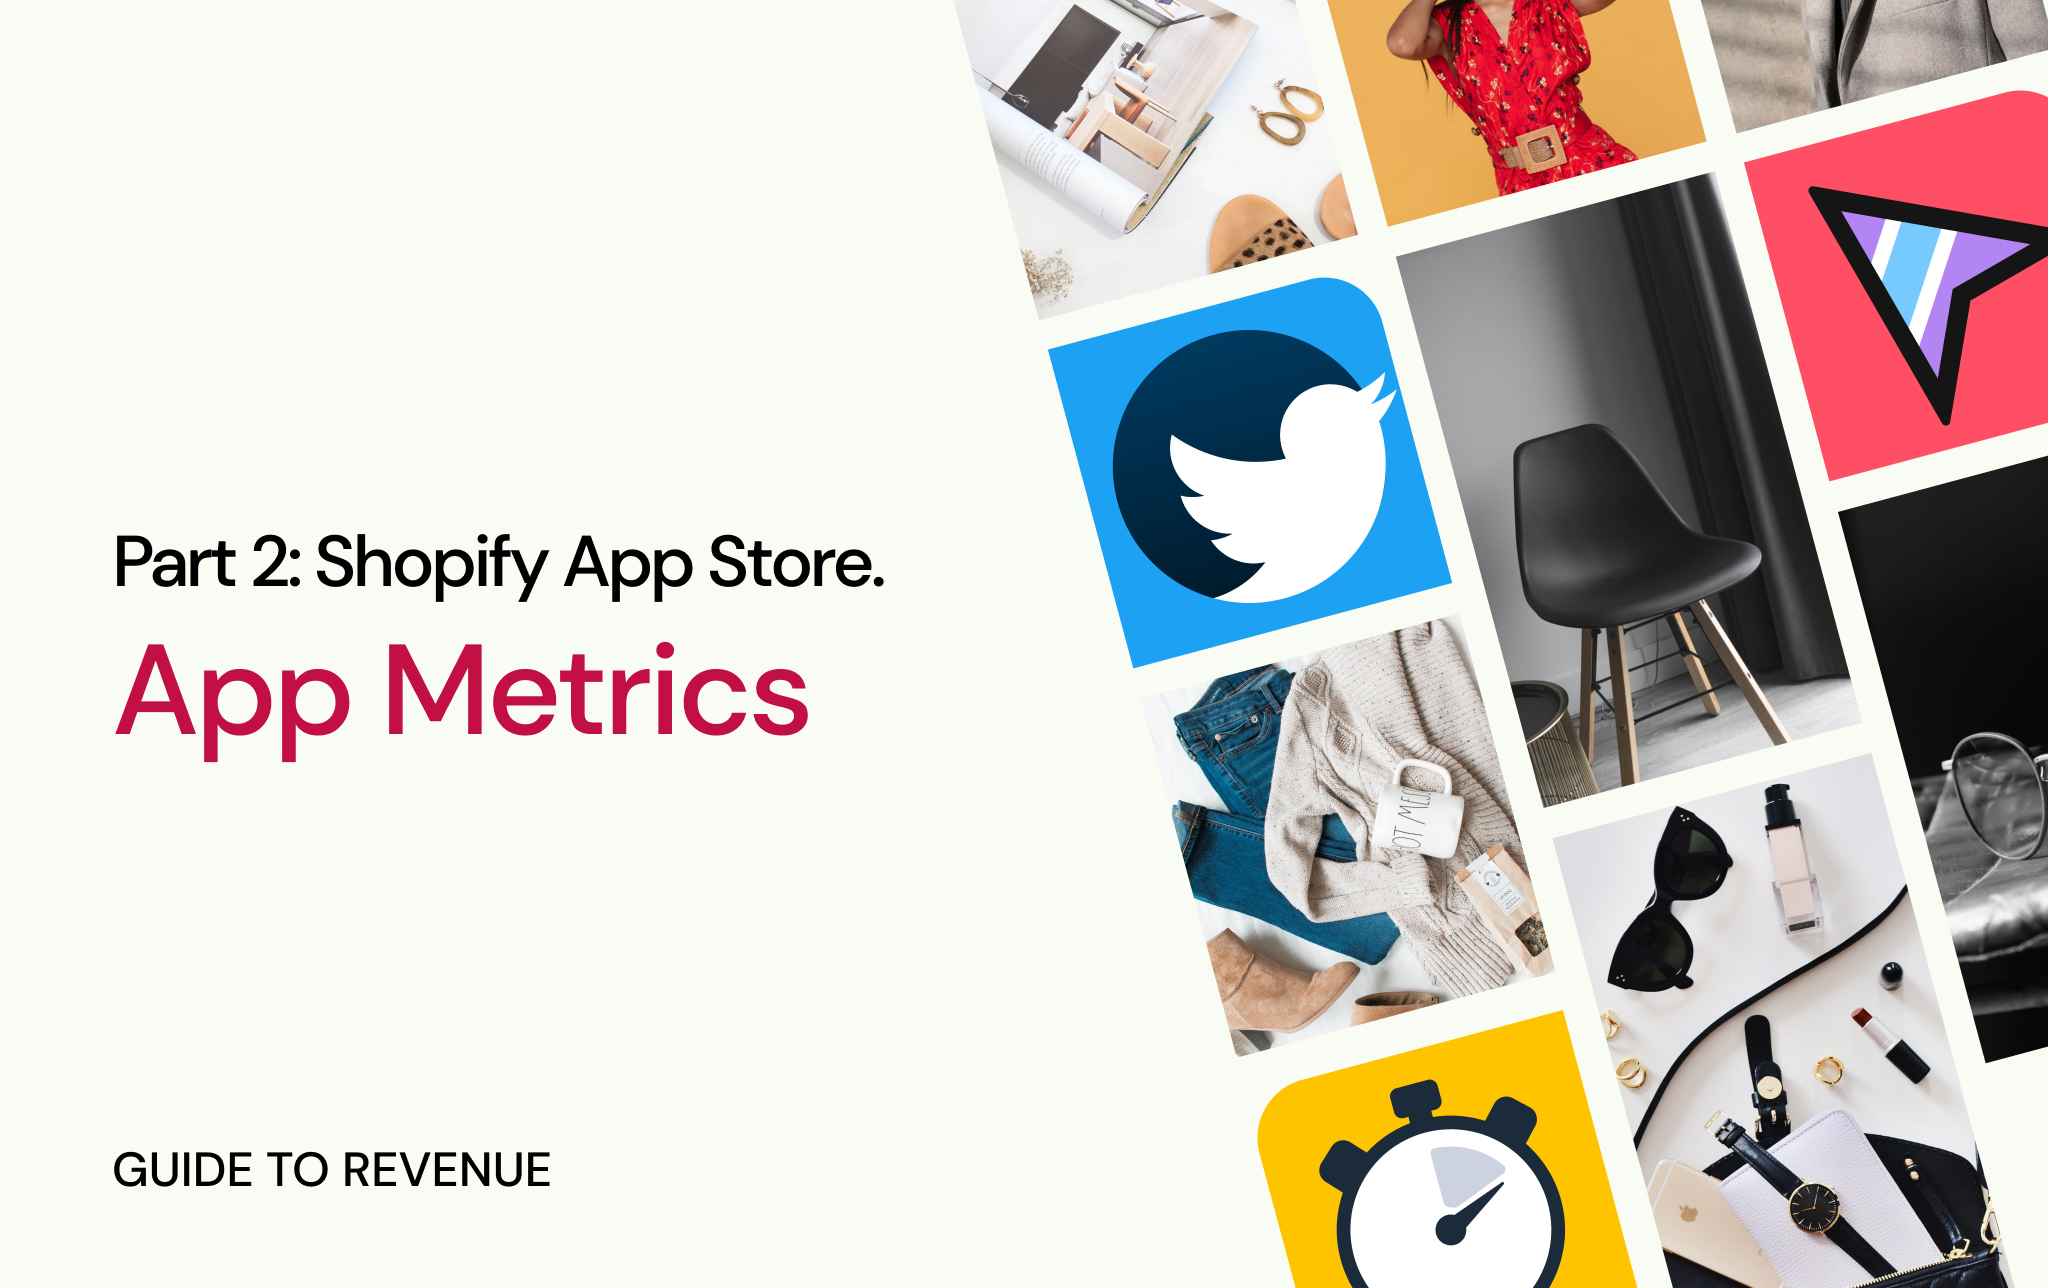 Shopify App Store. Guide to revenue. App Metrics